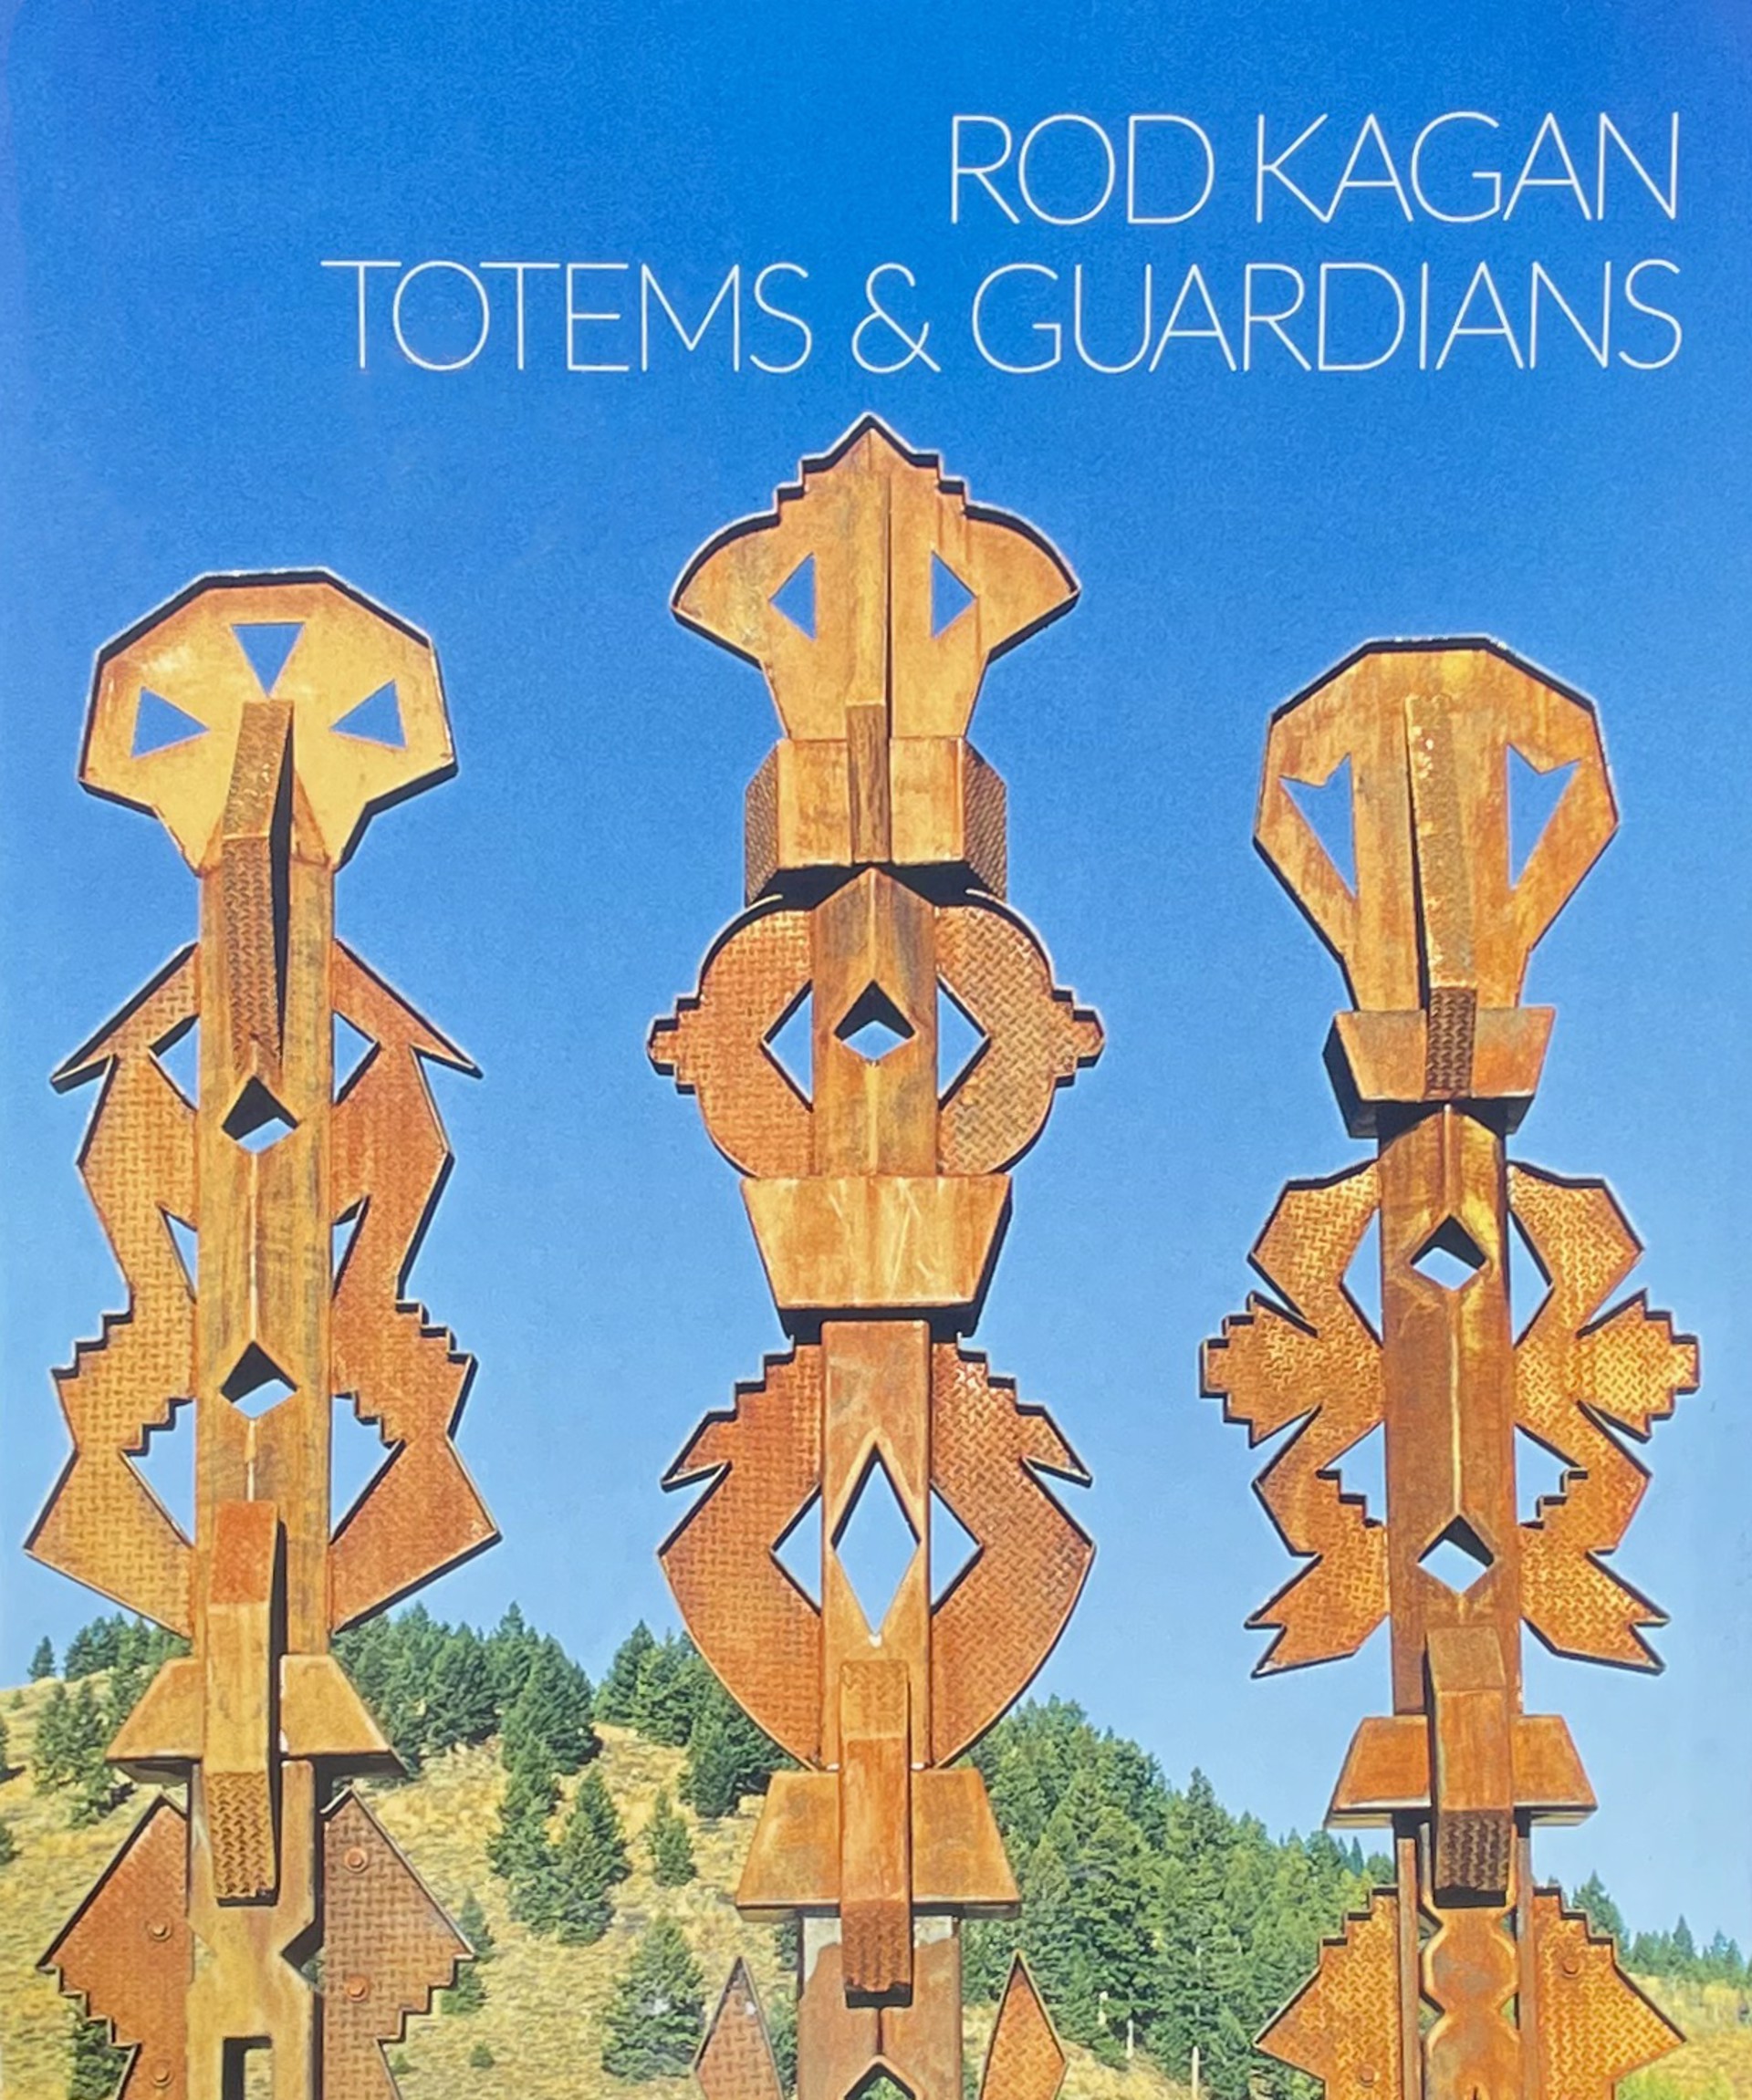 Totems & Guardians by Rod Kagan